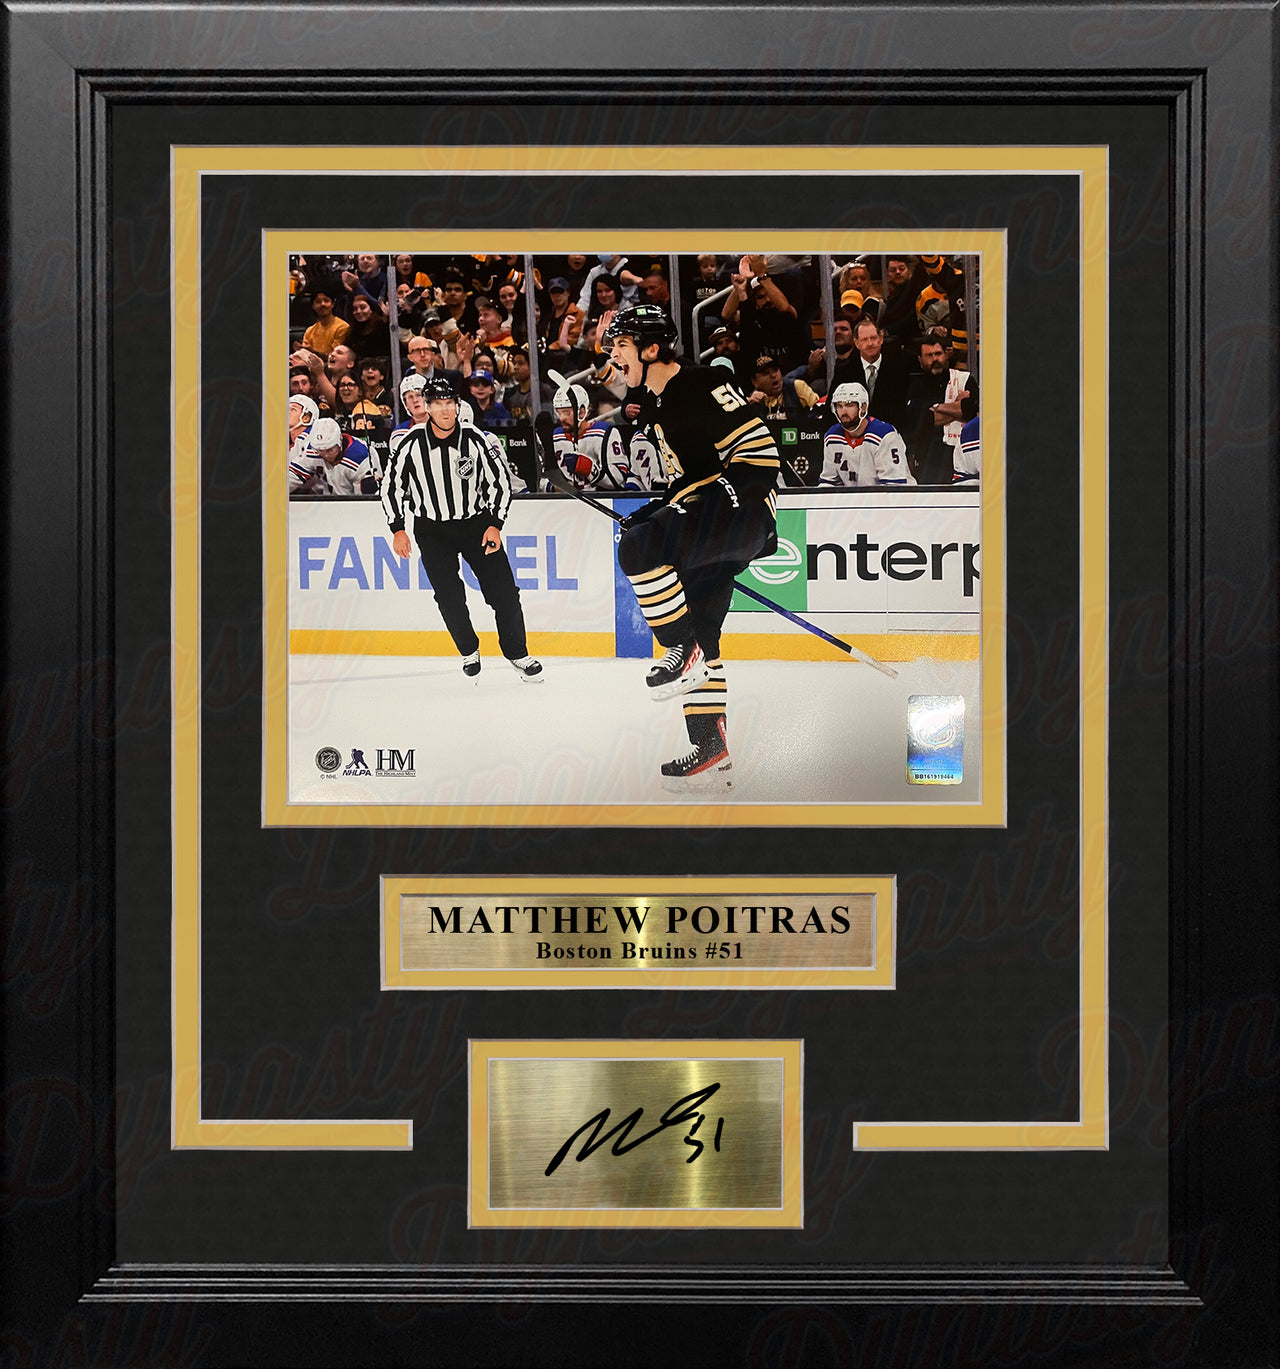 Matthew Poitras Celebration Boston Bruins 16" x 20" Framed Hockey Photo with Engraved Autograph